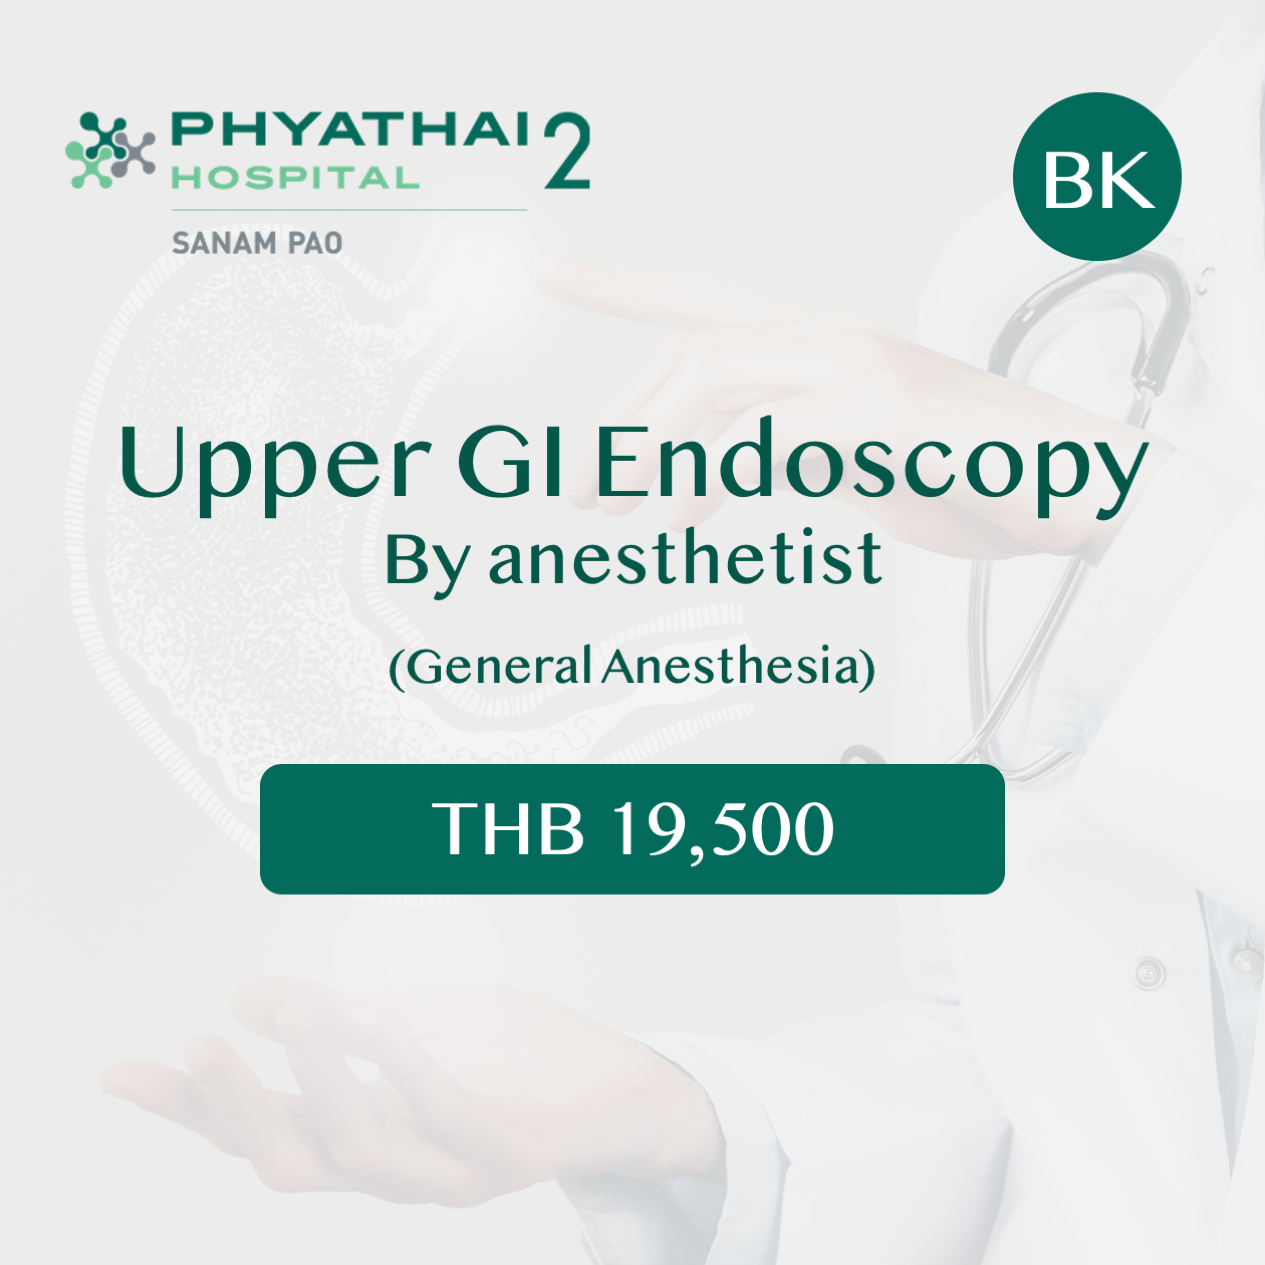 Phyathai 2 (BK) Upper GI Endoscopy (General Anesthesia)